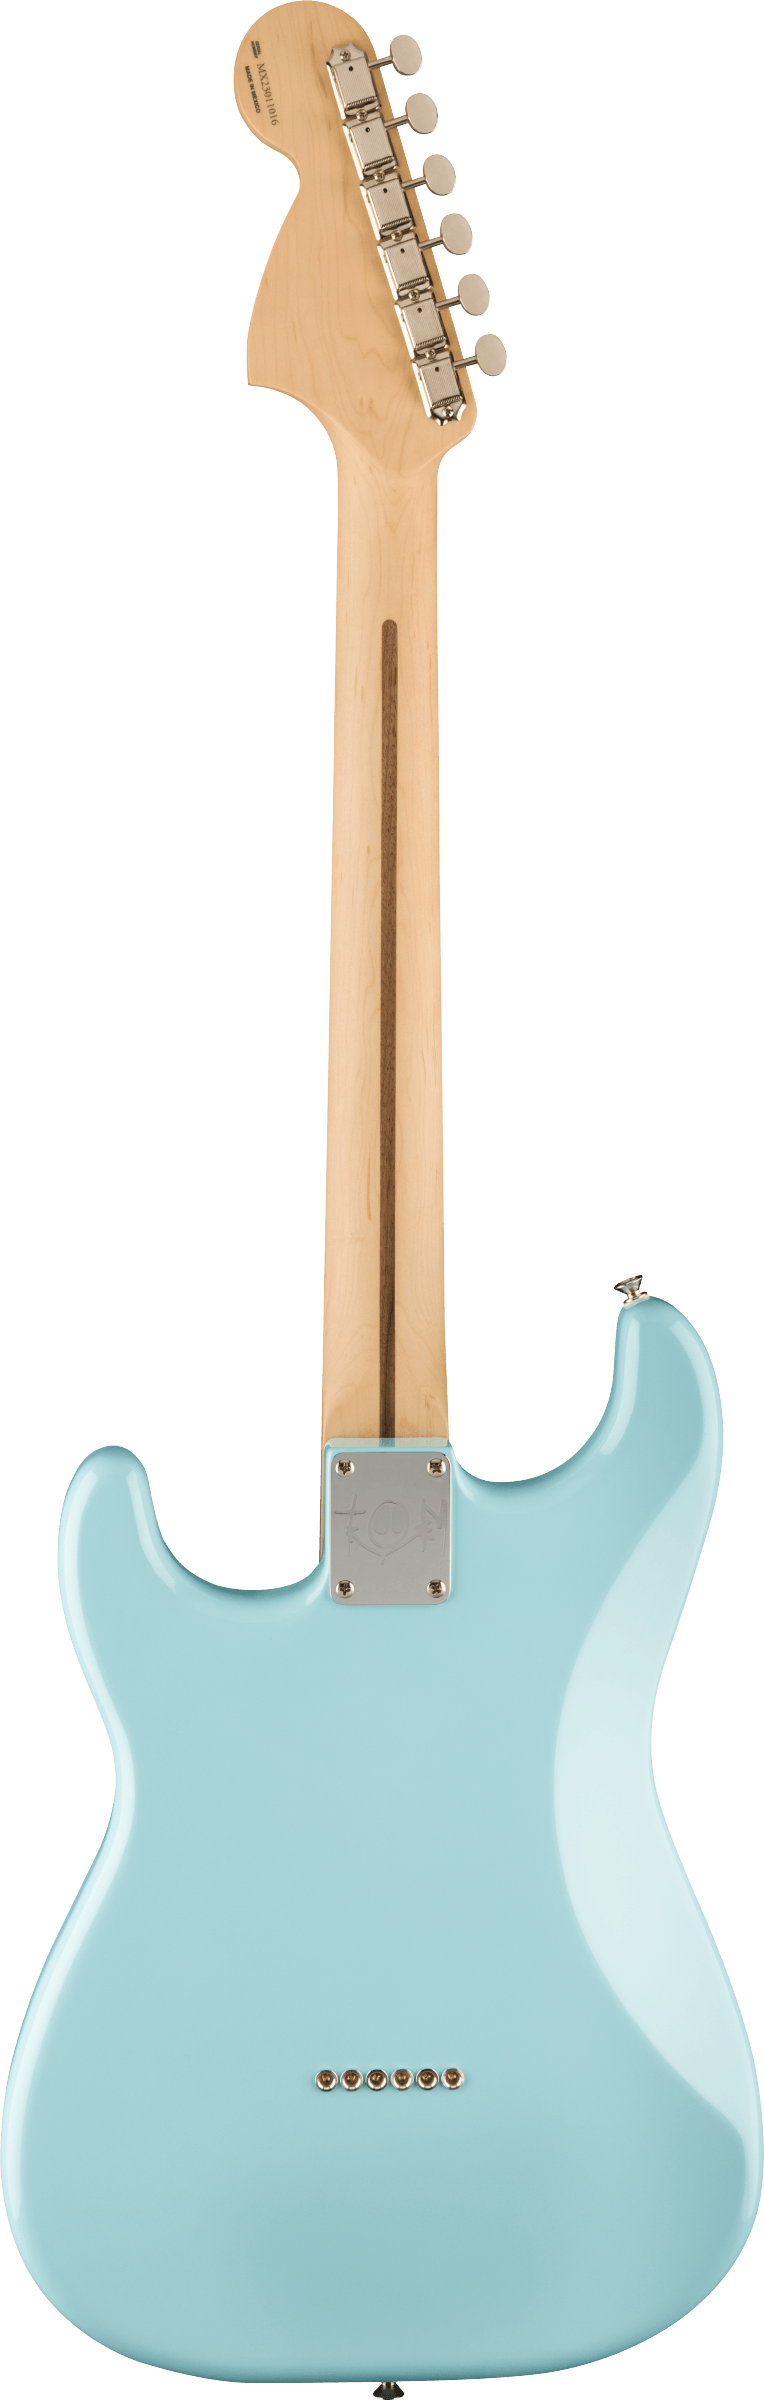 Fender Tom Delonge Signature Strat - Daphne Blue